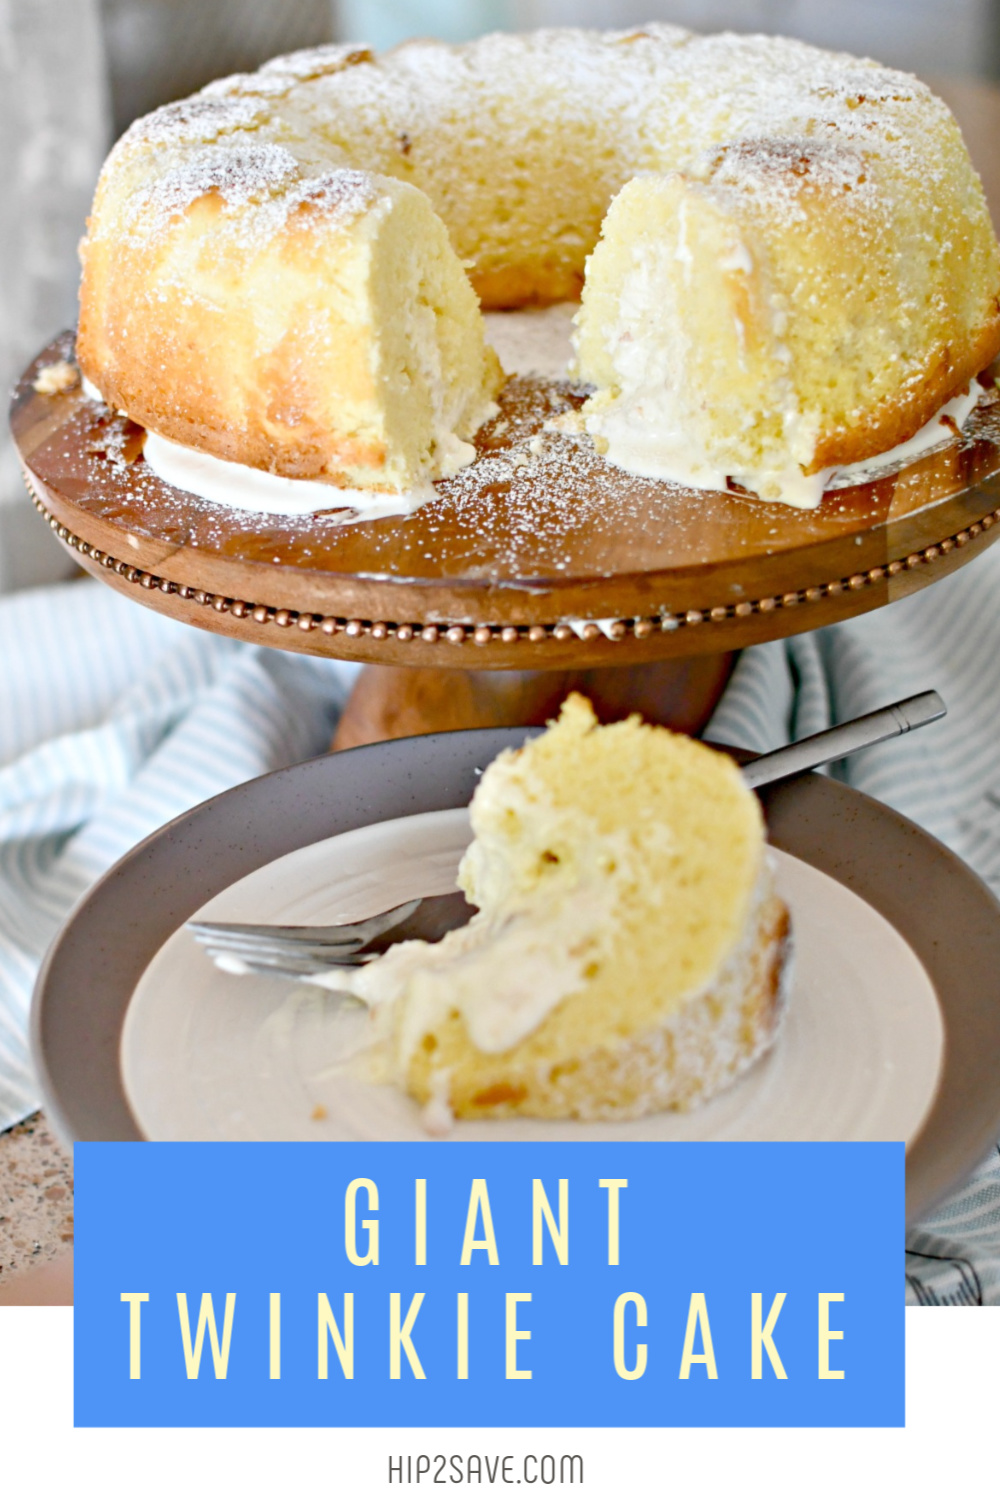 Make This Giant Twinkie Cake | Easy Bundt Cake Recipe Idea